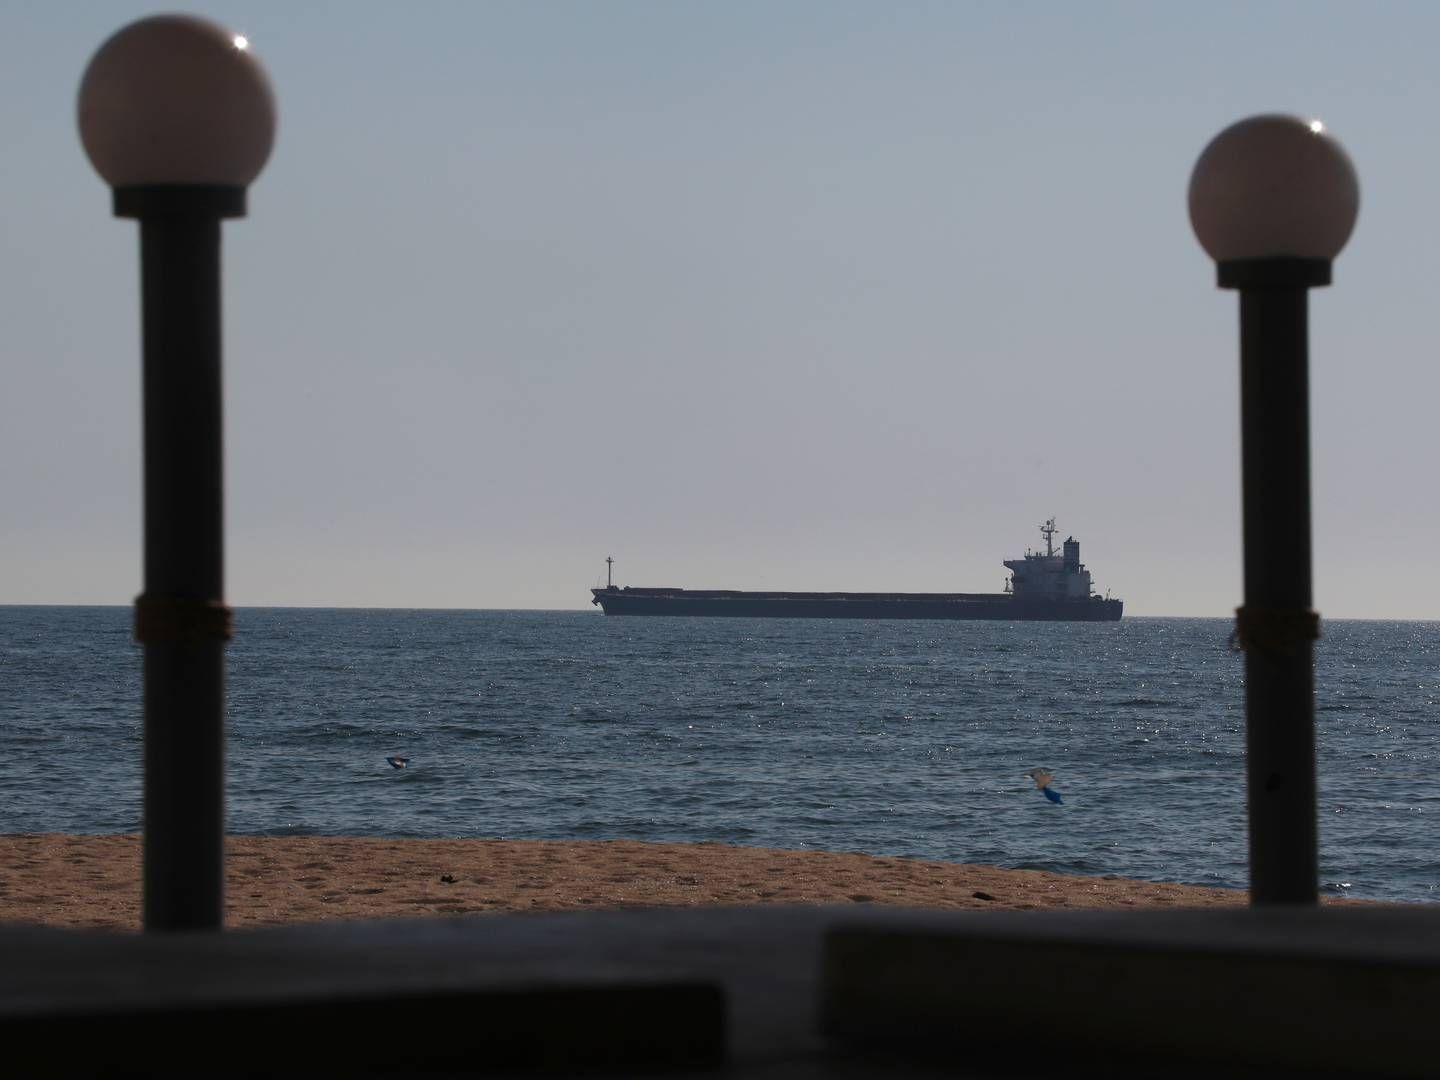 Stock photo. The ship in the picture is not operated by Western Bulk. | Photo: Nina Lyashonok/AP/Ritzau Scanpix